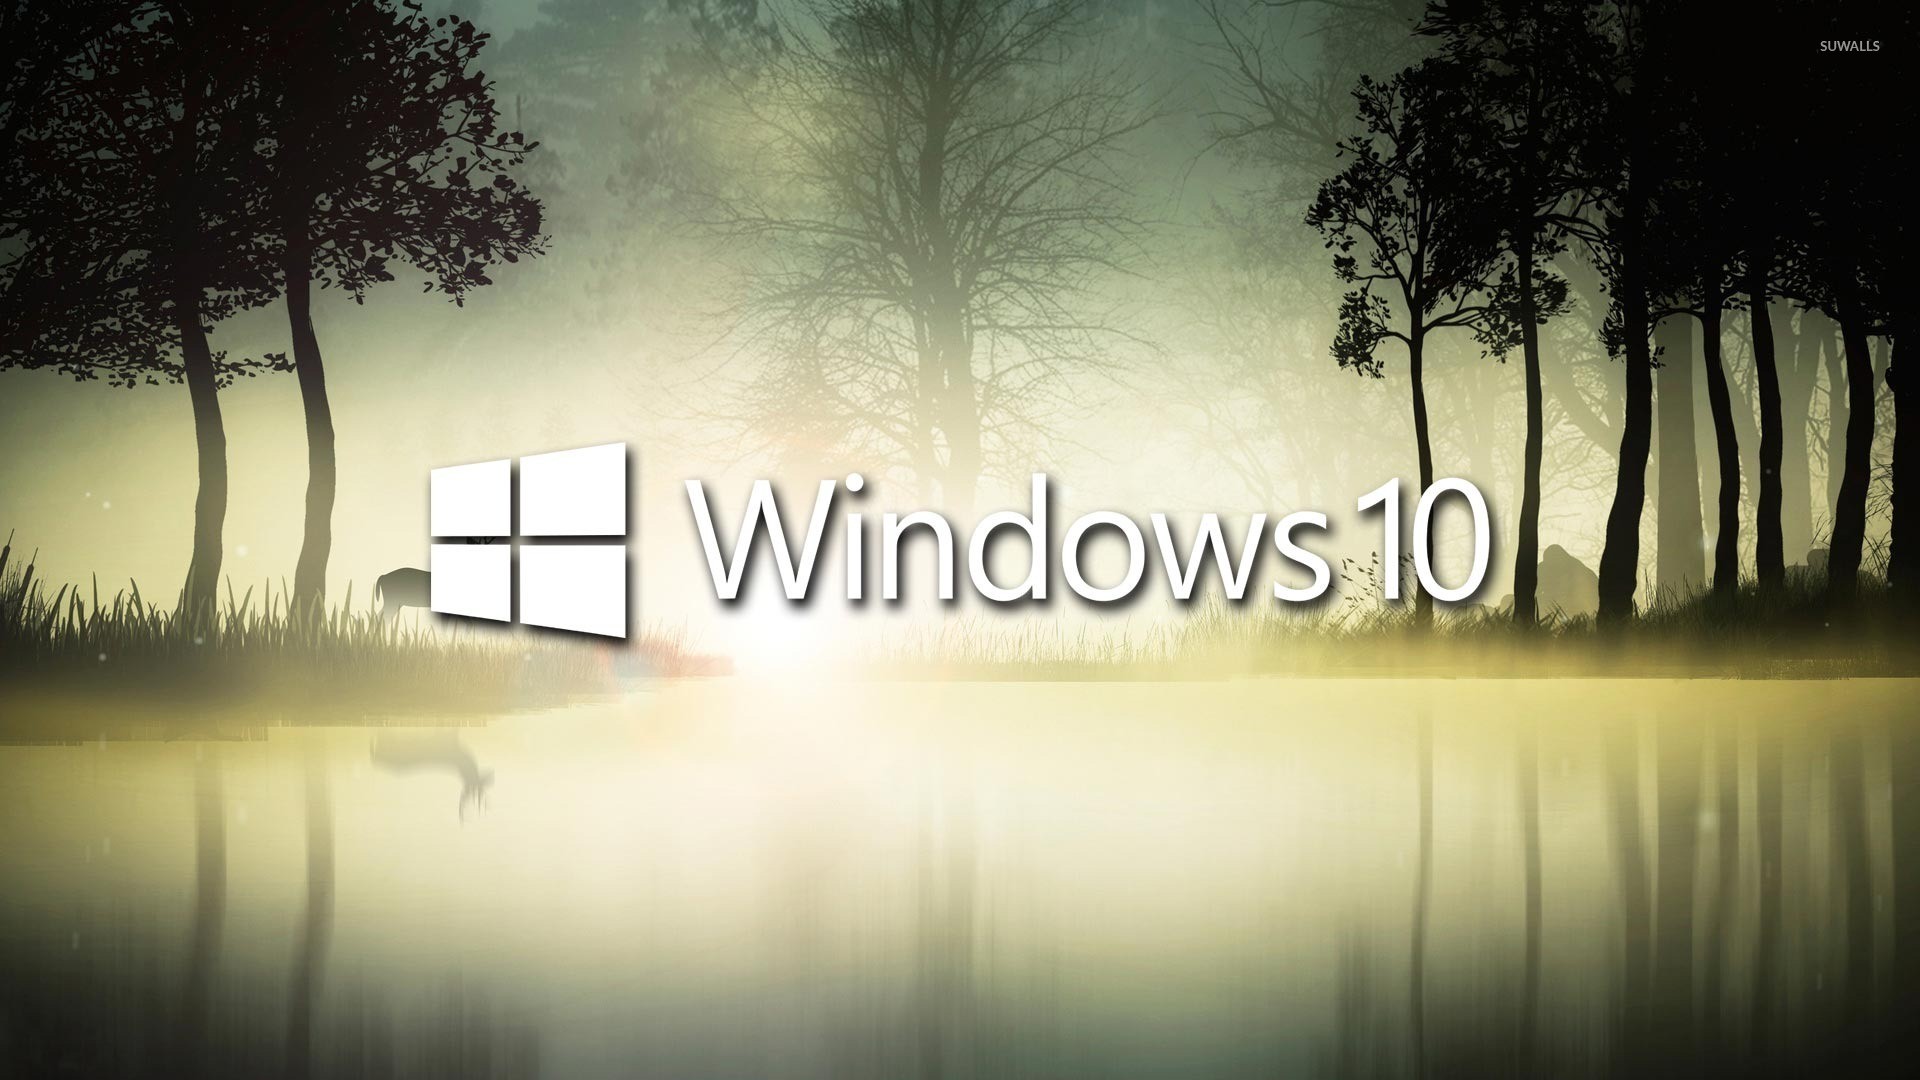 Windows 10 Wallpaper 1920x1080 (75+ images)